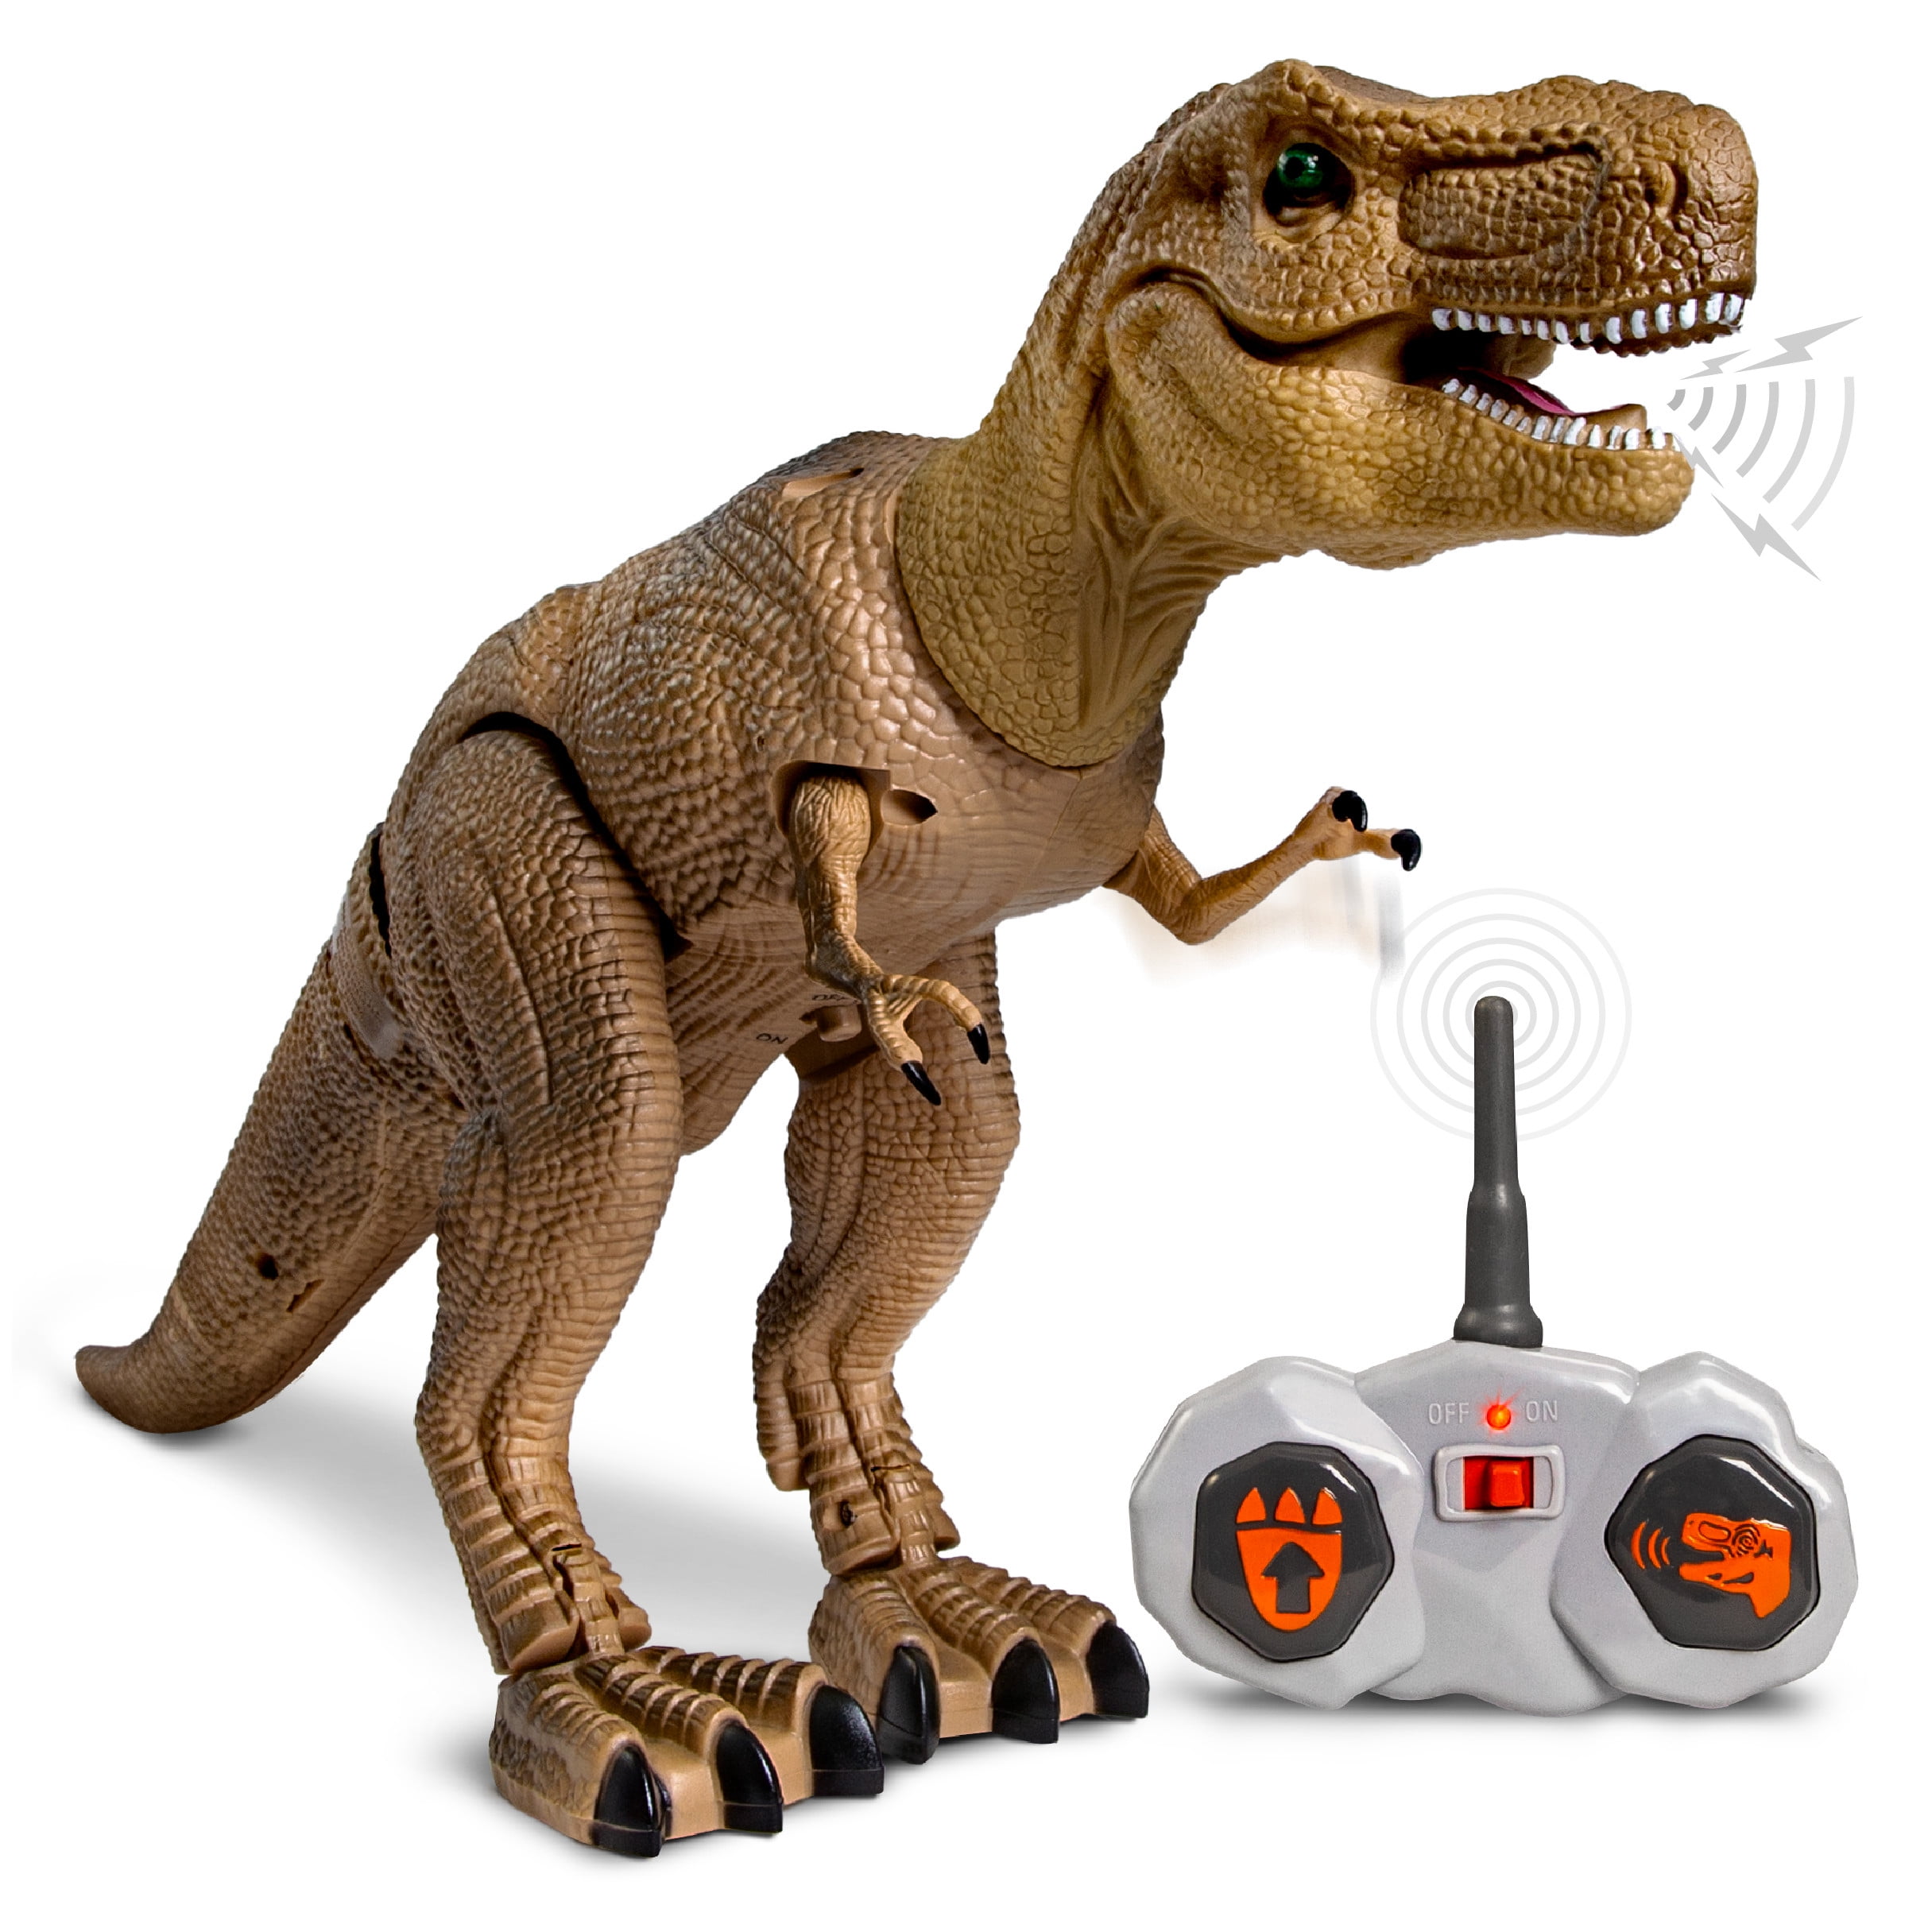 Movable Jaw Tyrannosaurus Rex Solid Plastic Dinosaur Figure Toy Model Kids Gift 